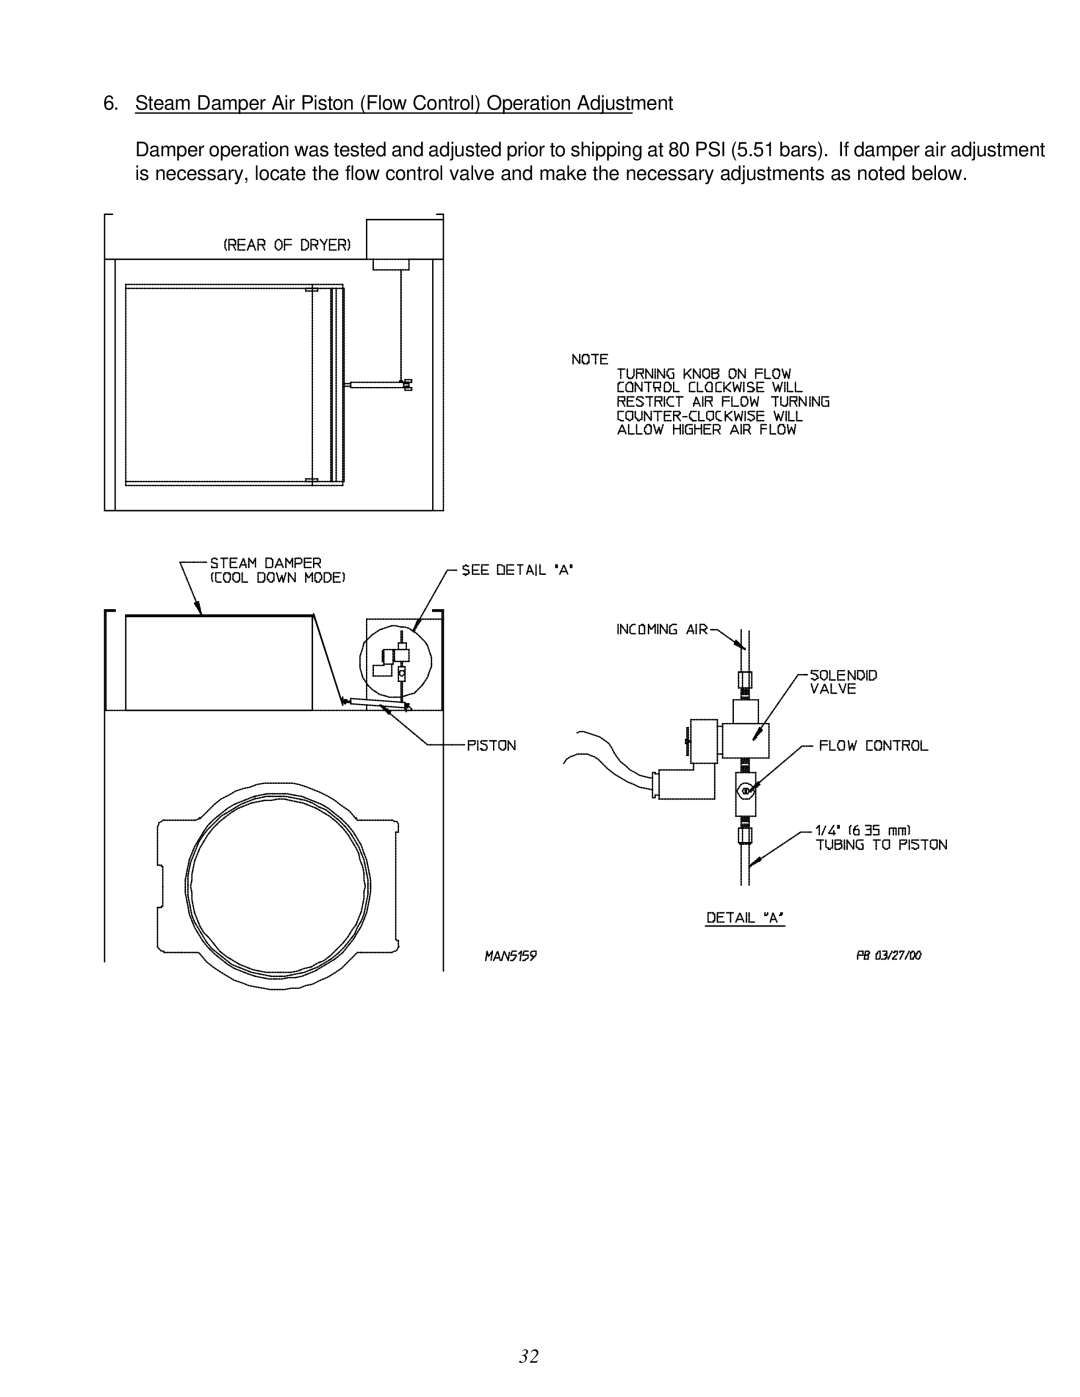 American Dryer Corp D-40 installation manual Steam Damper Air Piston Flow Control Operation Adjustment 